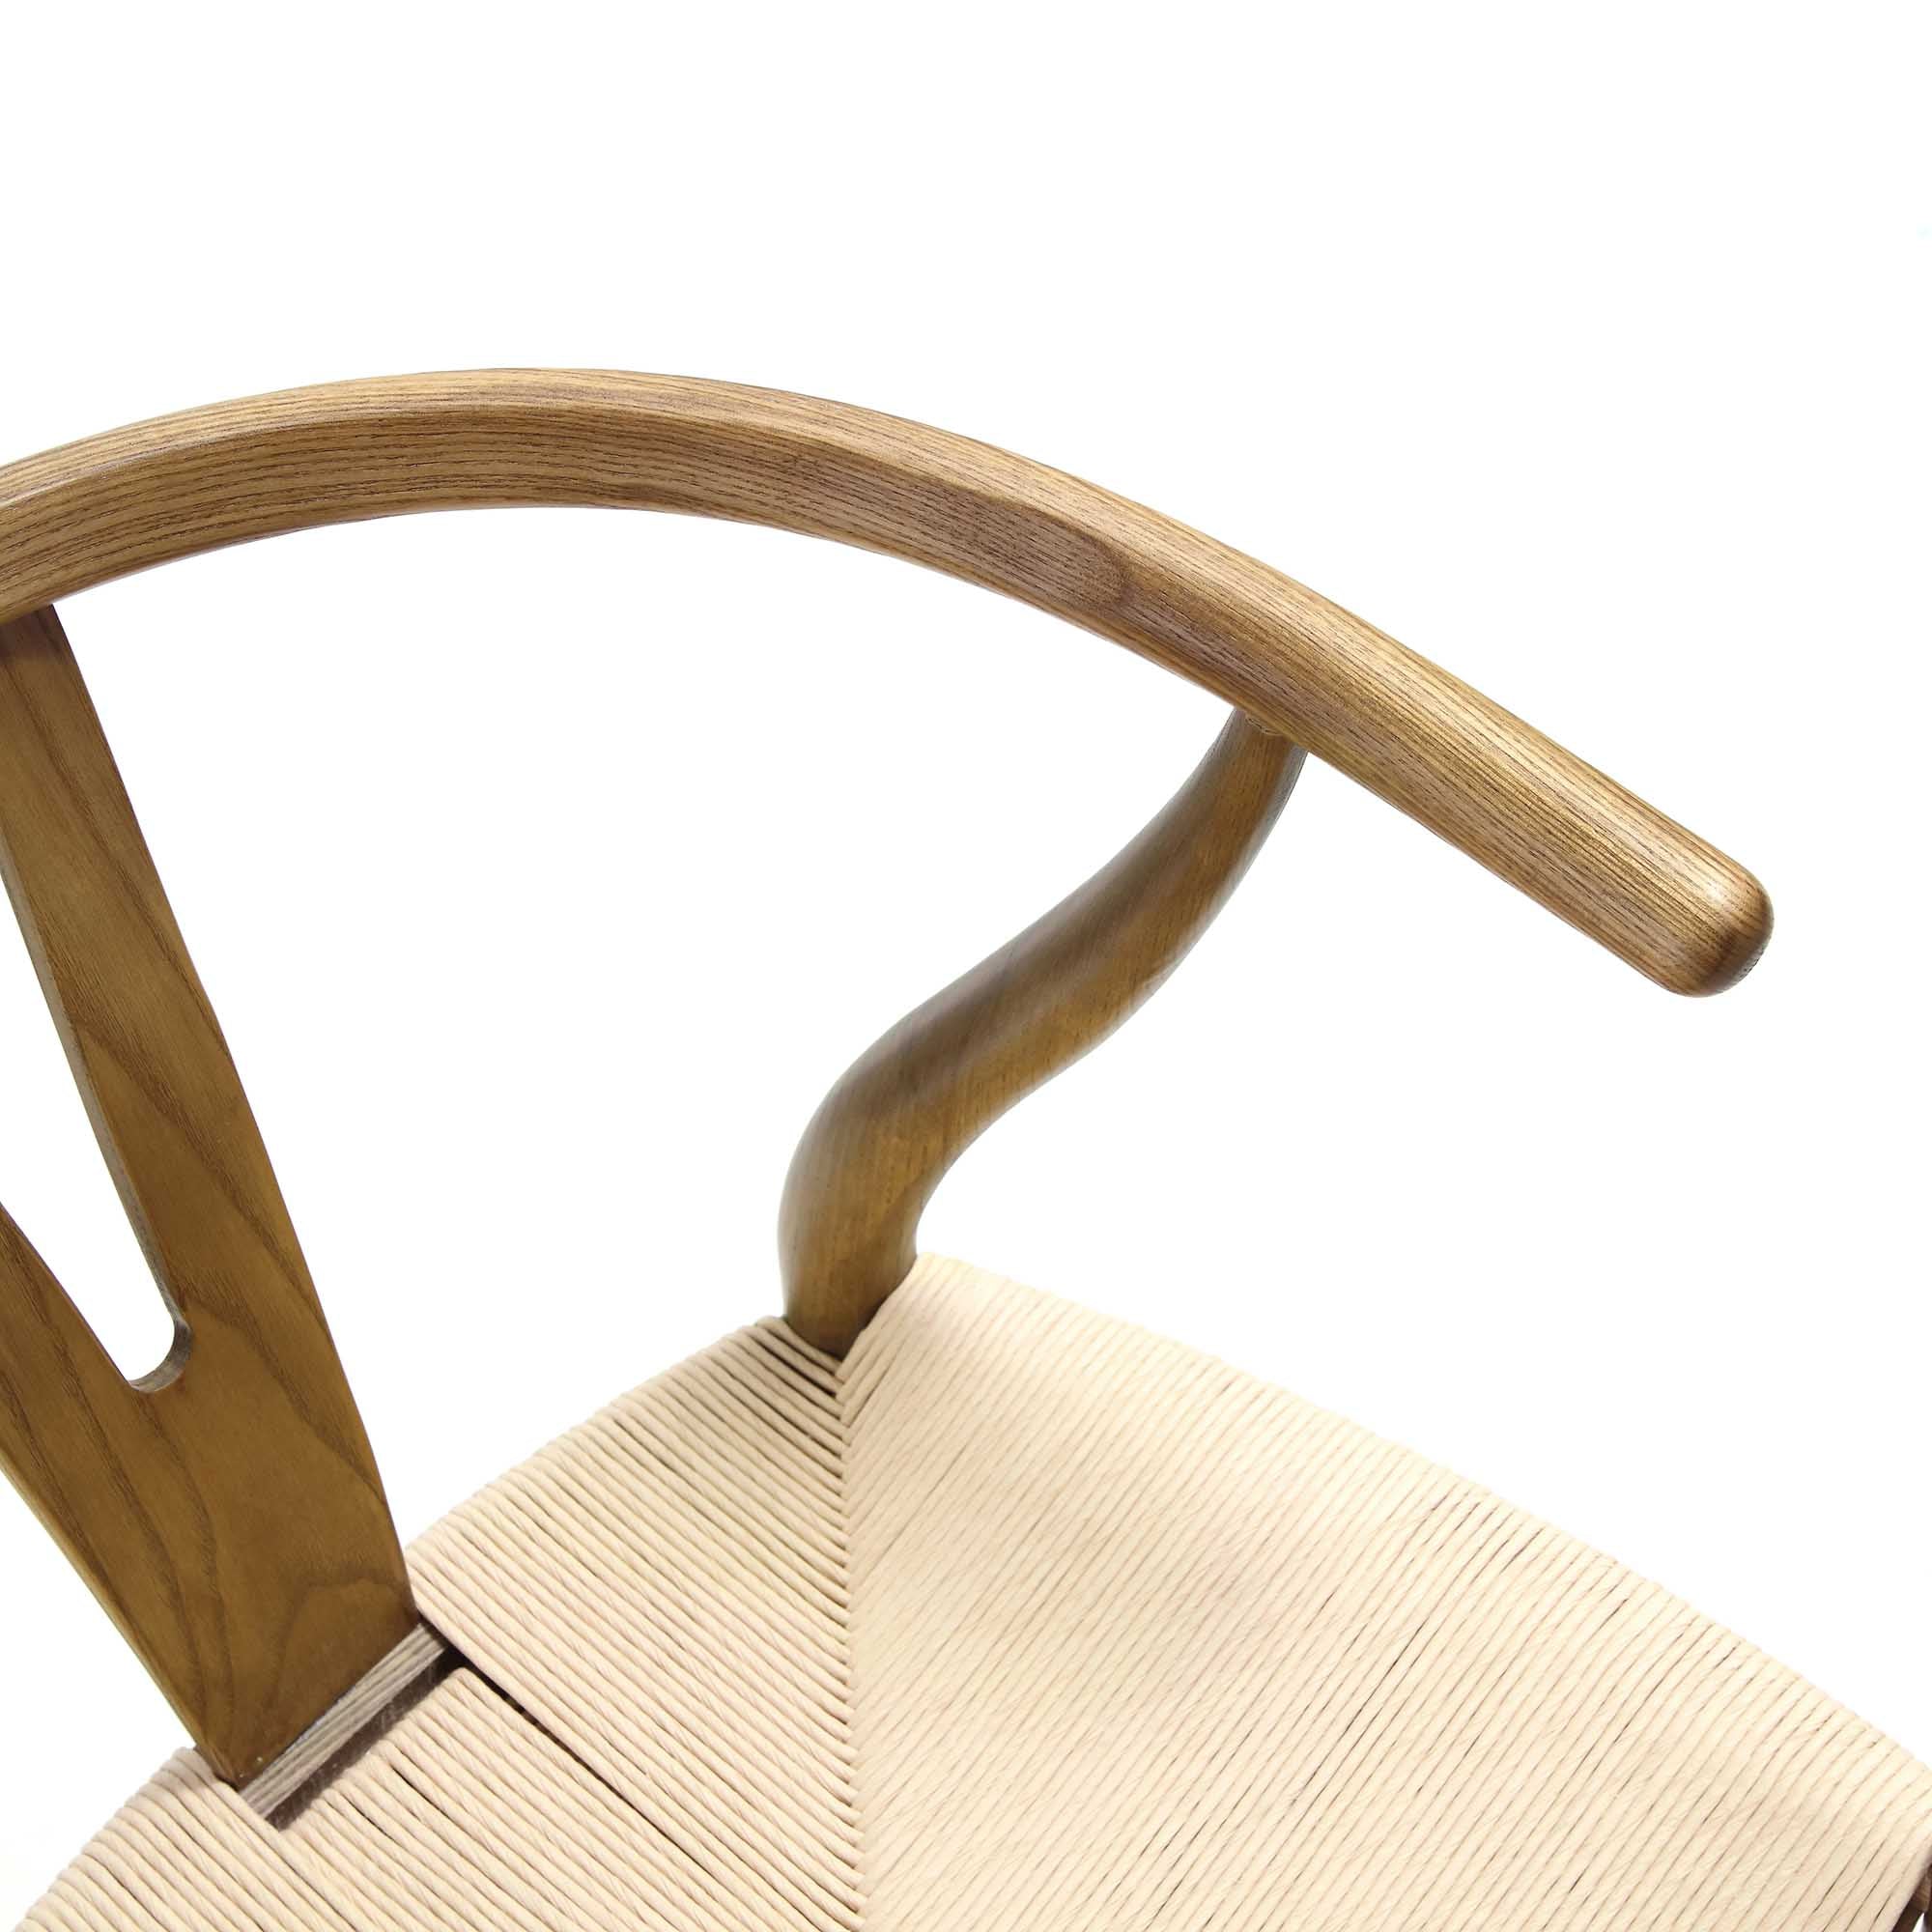 Hansel Wooden Natural Weave Wishbone Dining Chair, Light Walnut Colour Frame